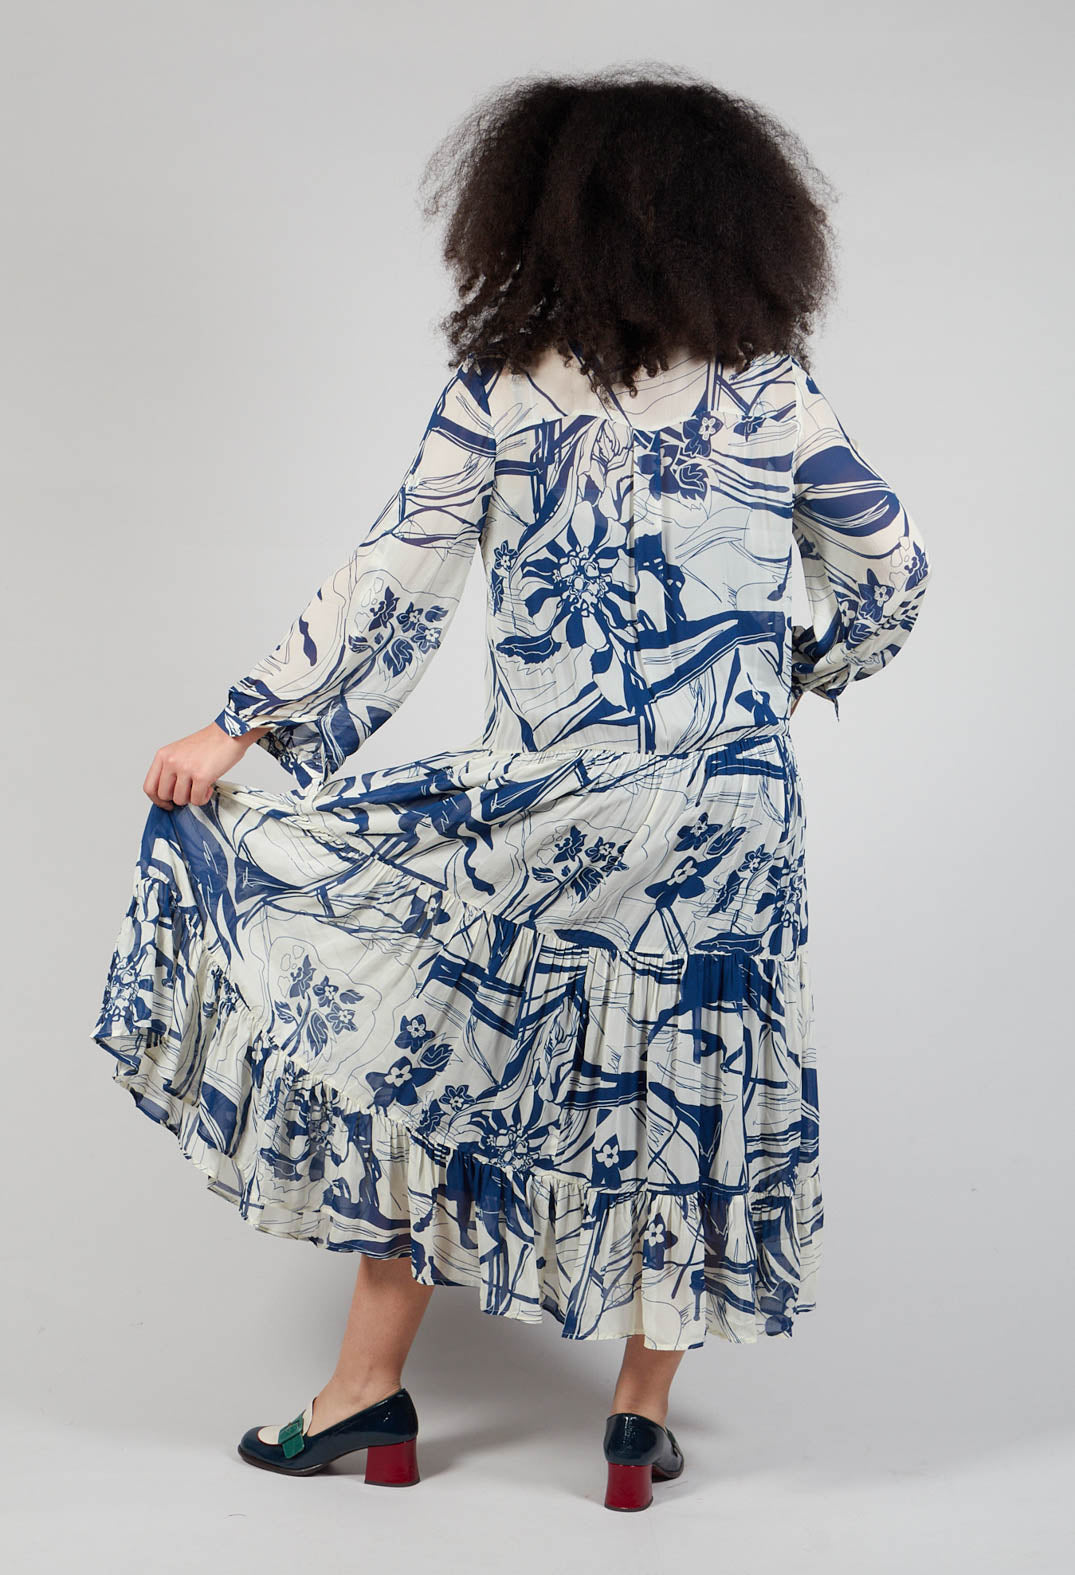 Abstract Print Flounce Dress in Light Blue